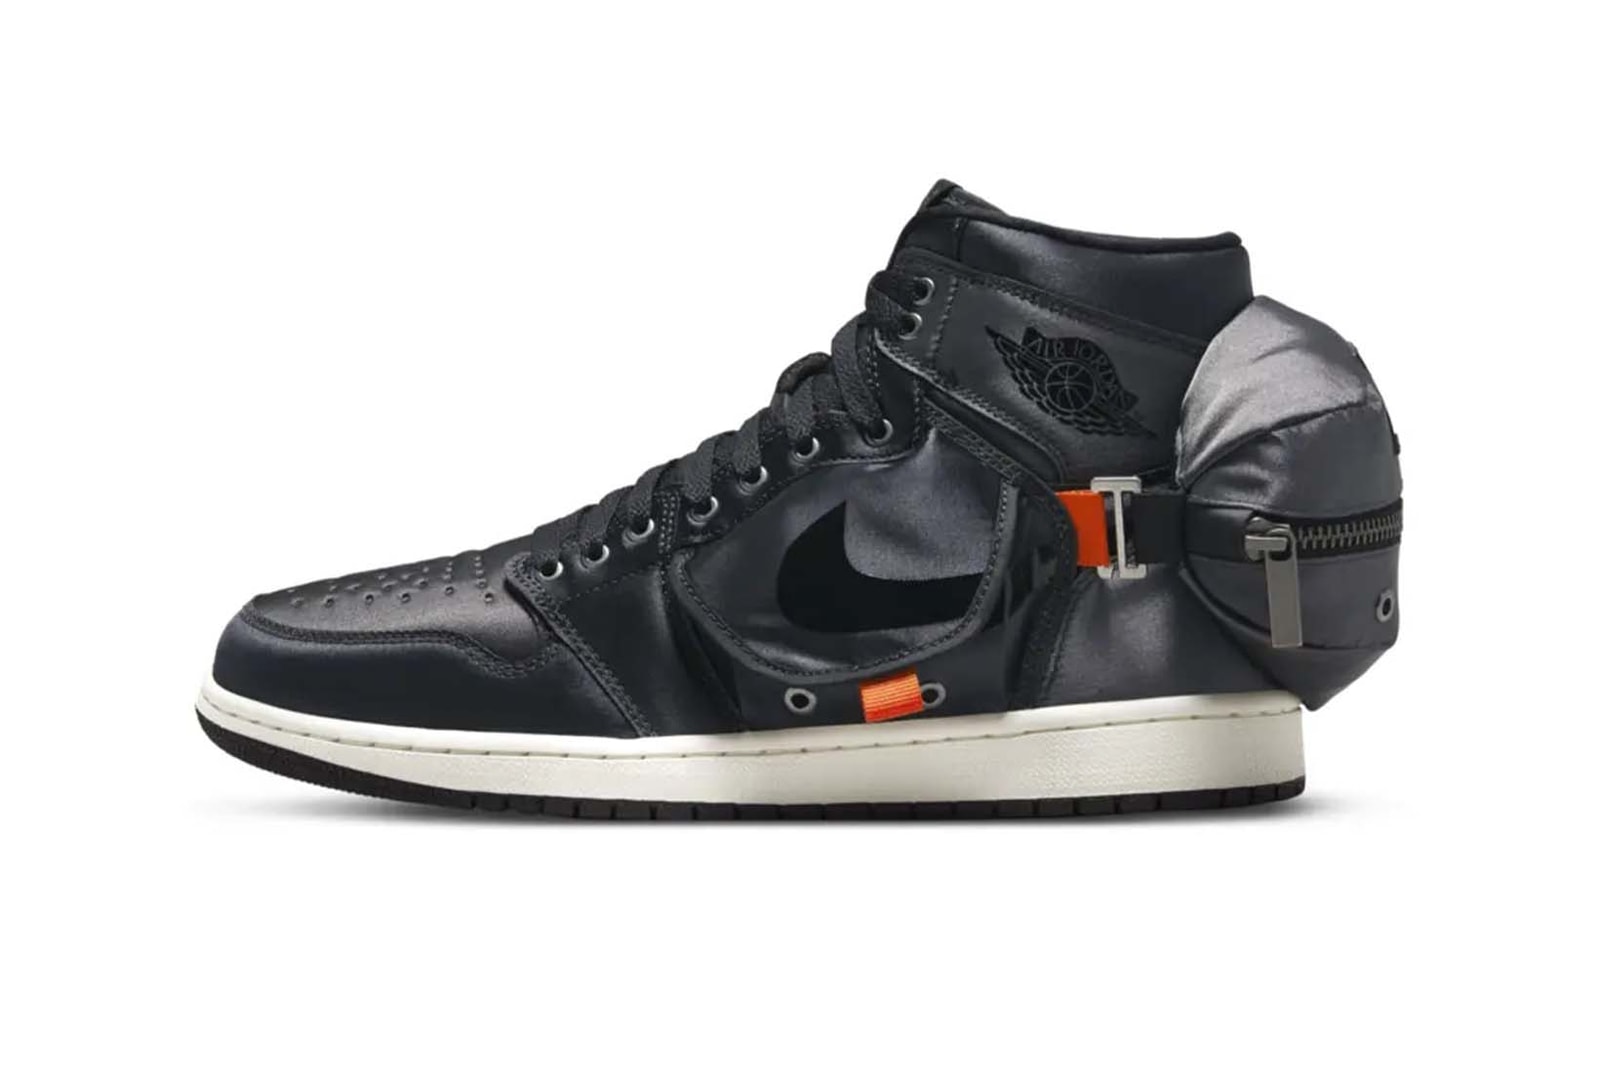 Sneaker Release Calendar Nike adidas Yeezy Off-White Air Jordan